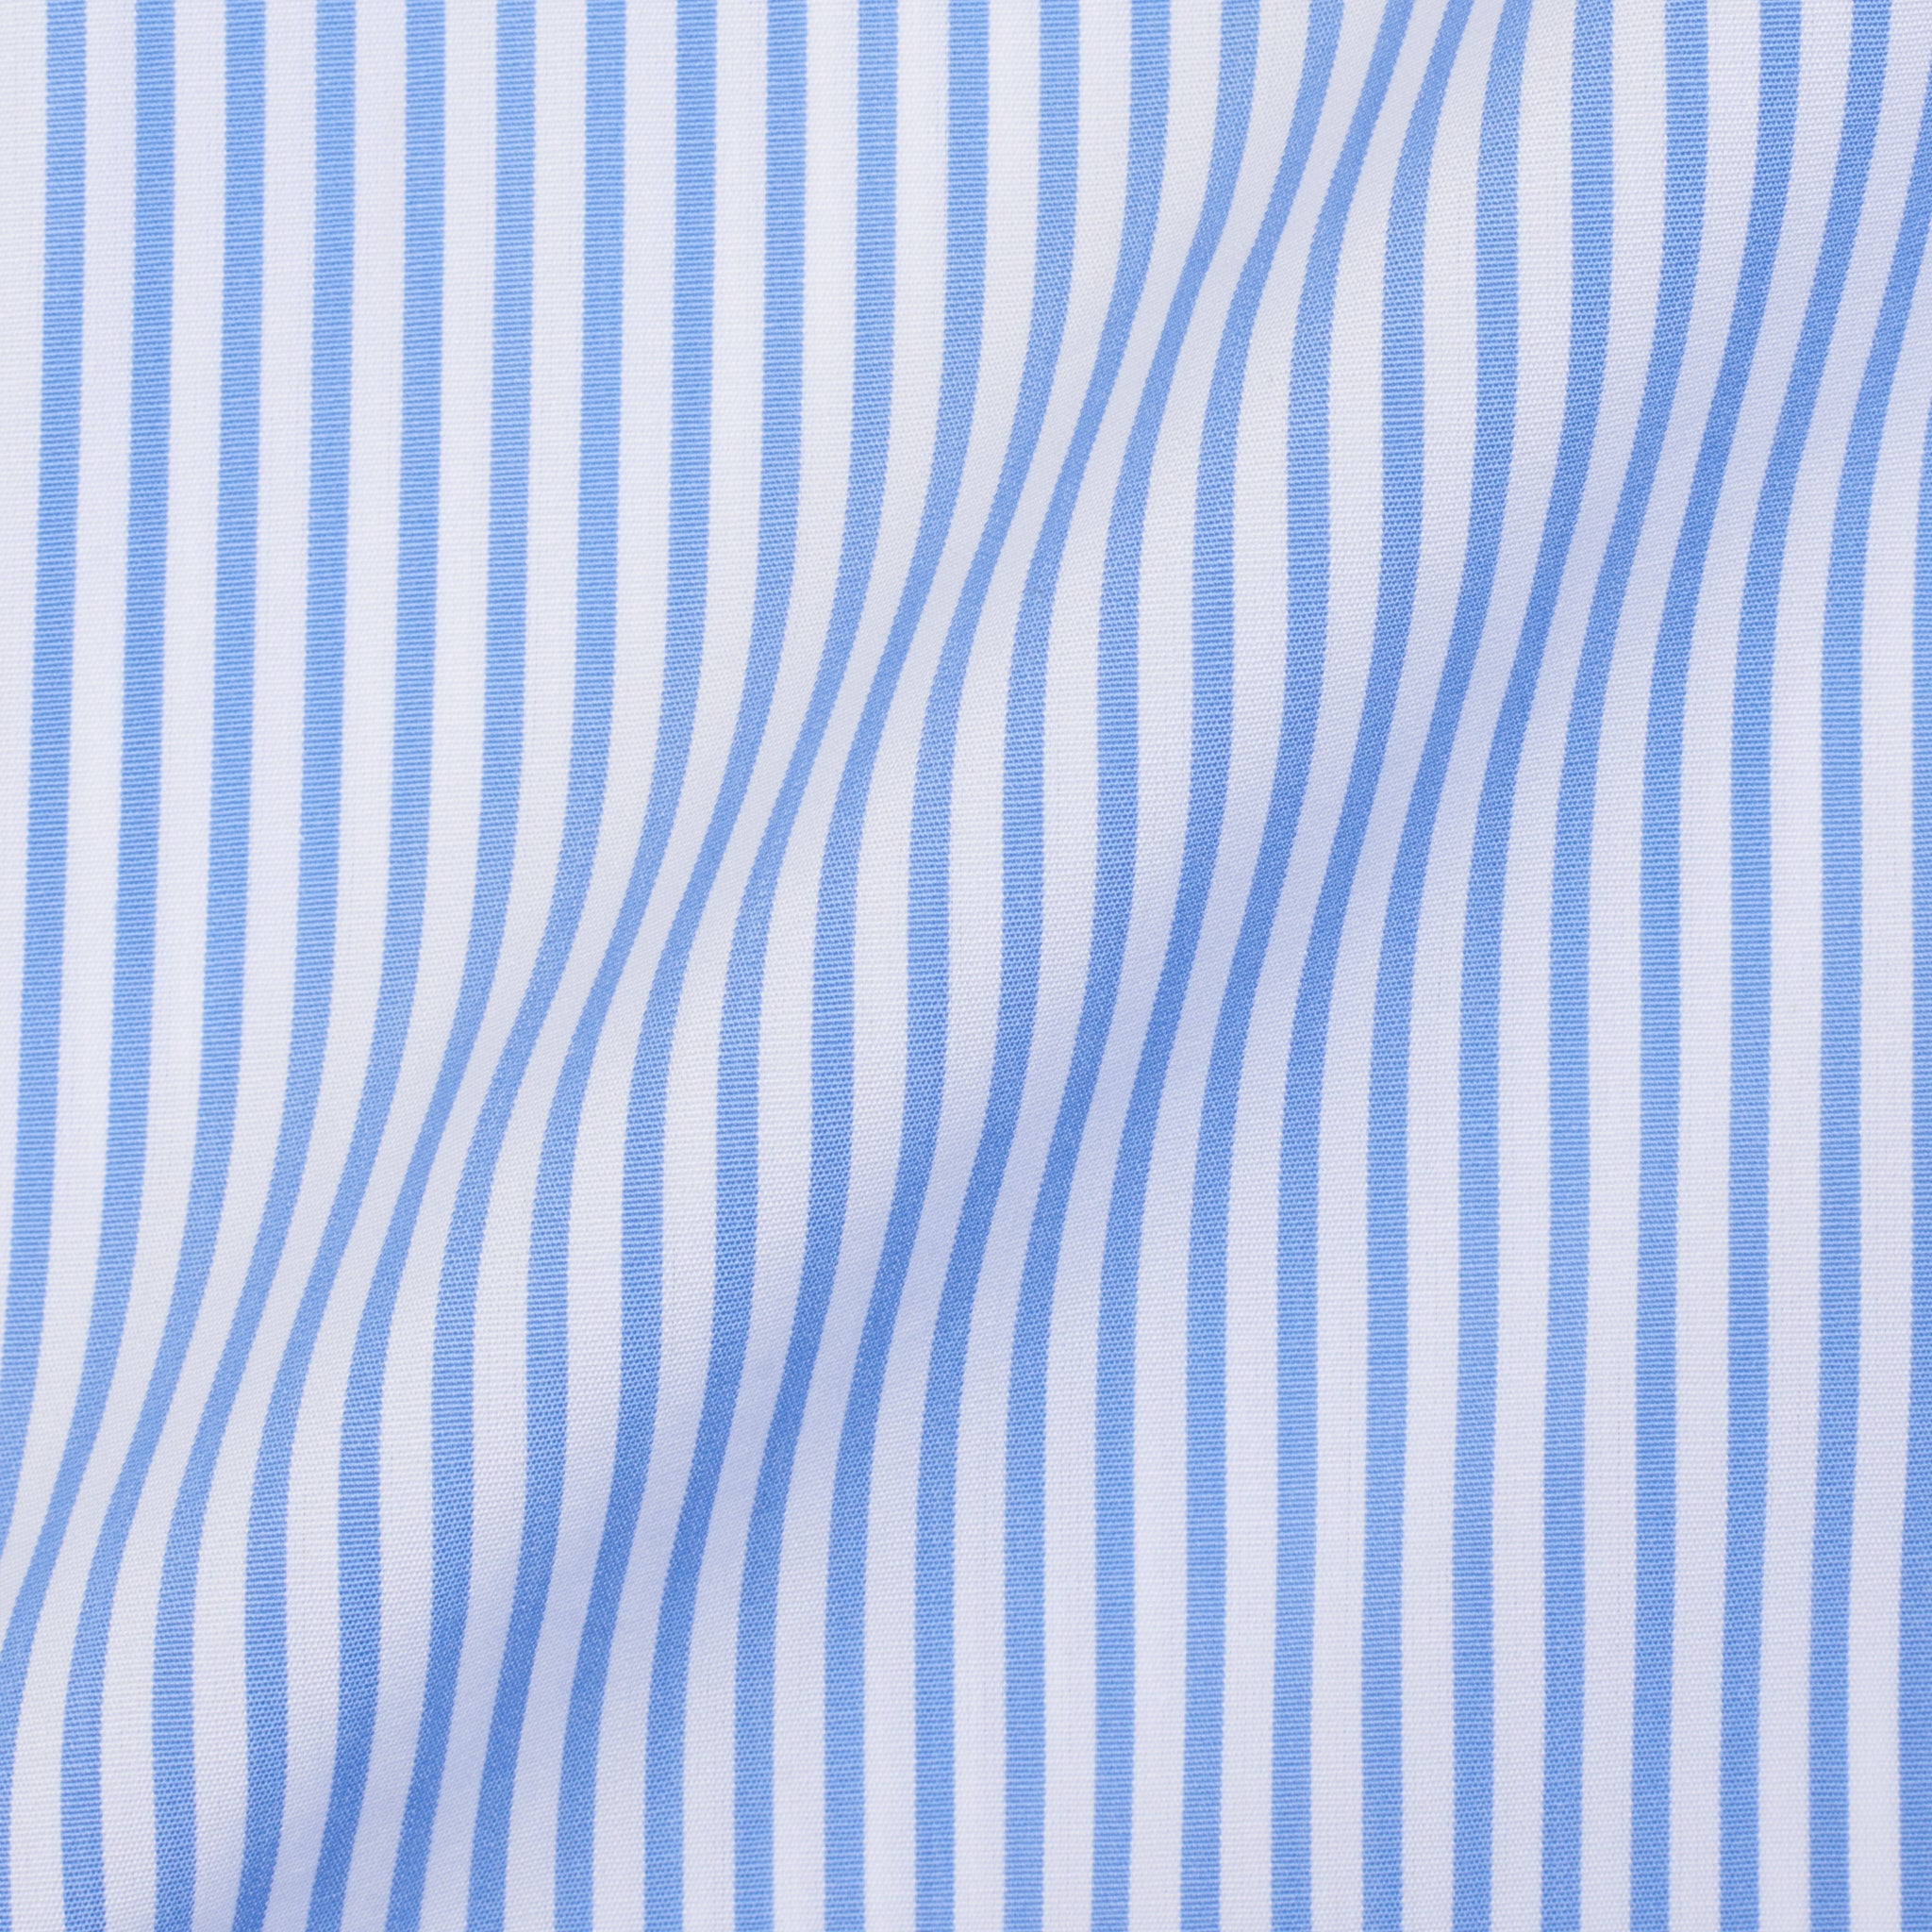 KITON Napoli Handmade Bespoke Blue Striped Poplin Cotton Dress Shirt EU 41 US 16 KITON